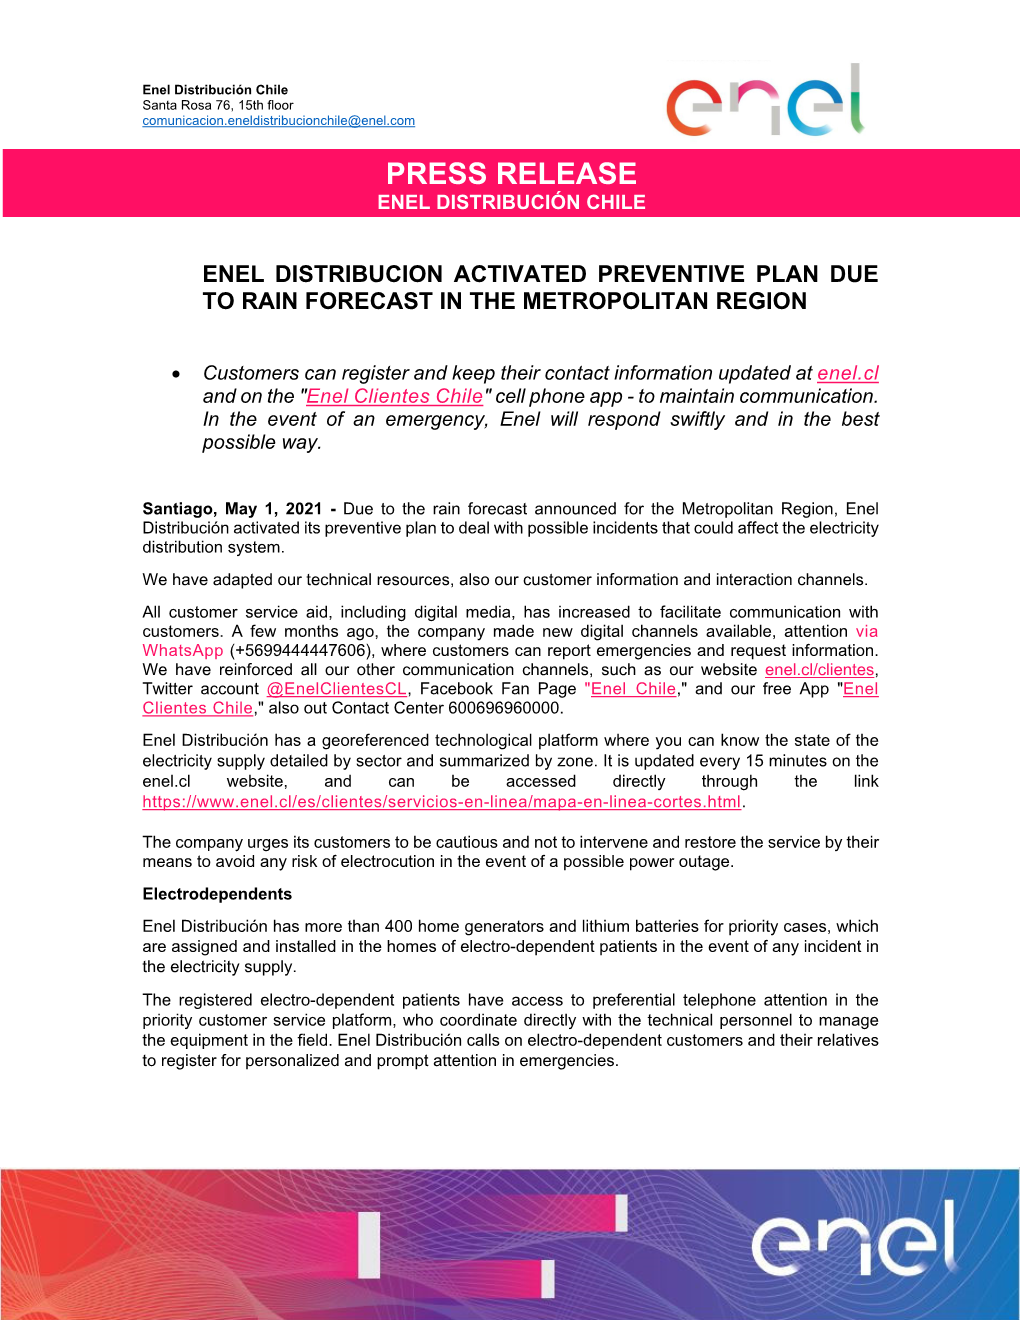 Enel Distribución Activated Preventive Plan Due to Rain Forecast in The